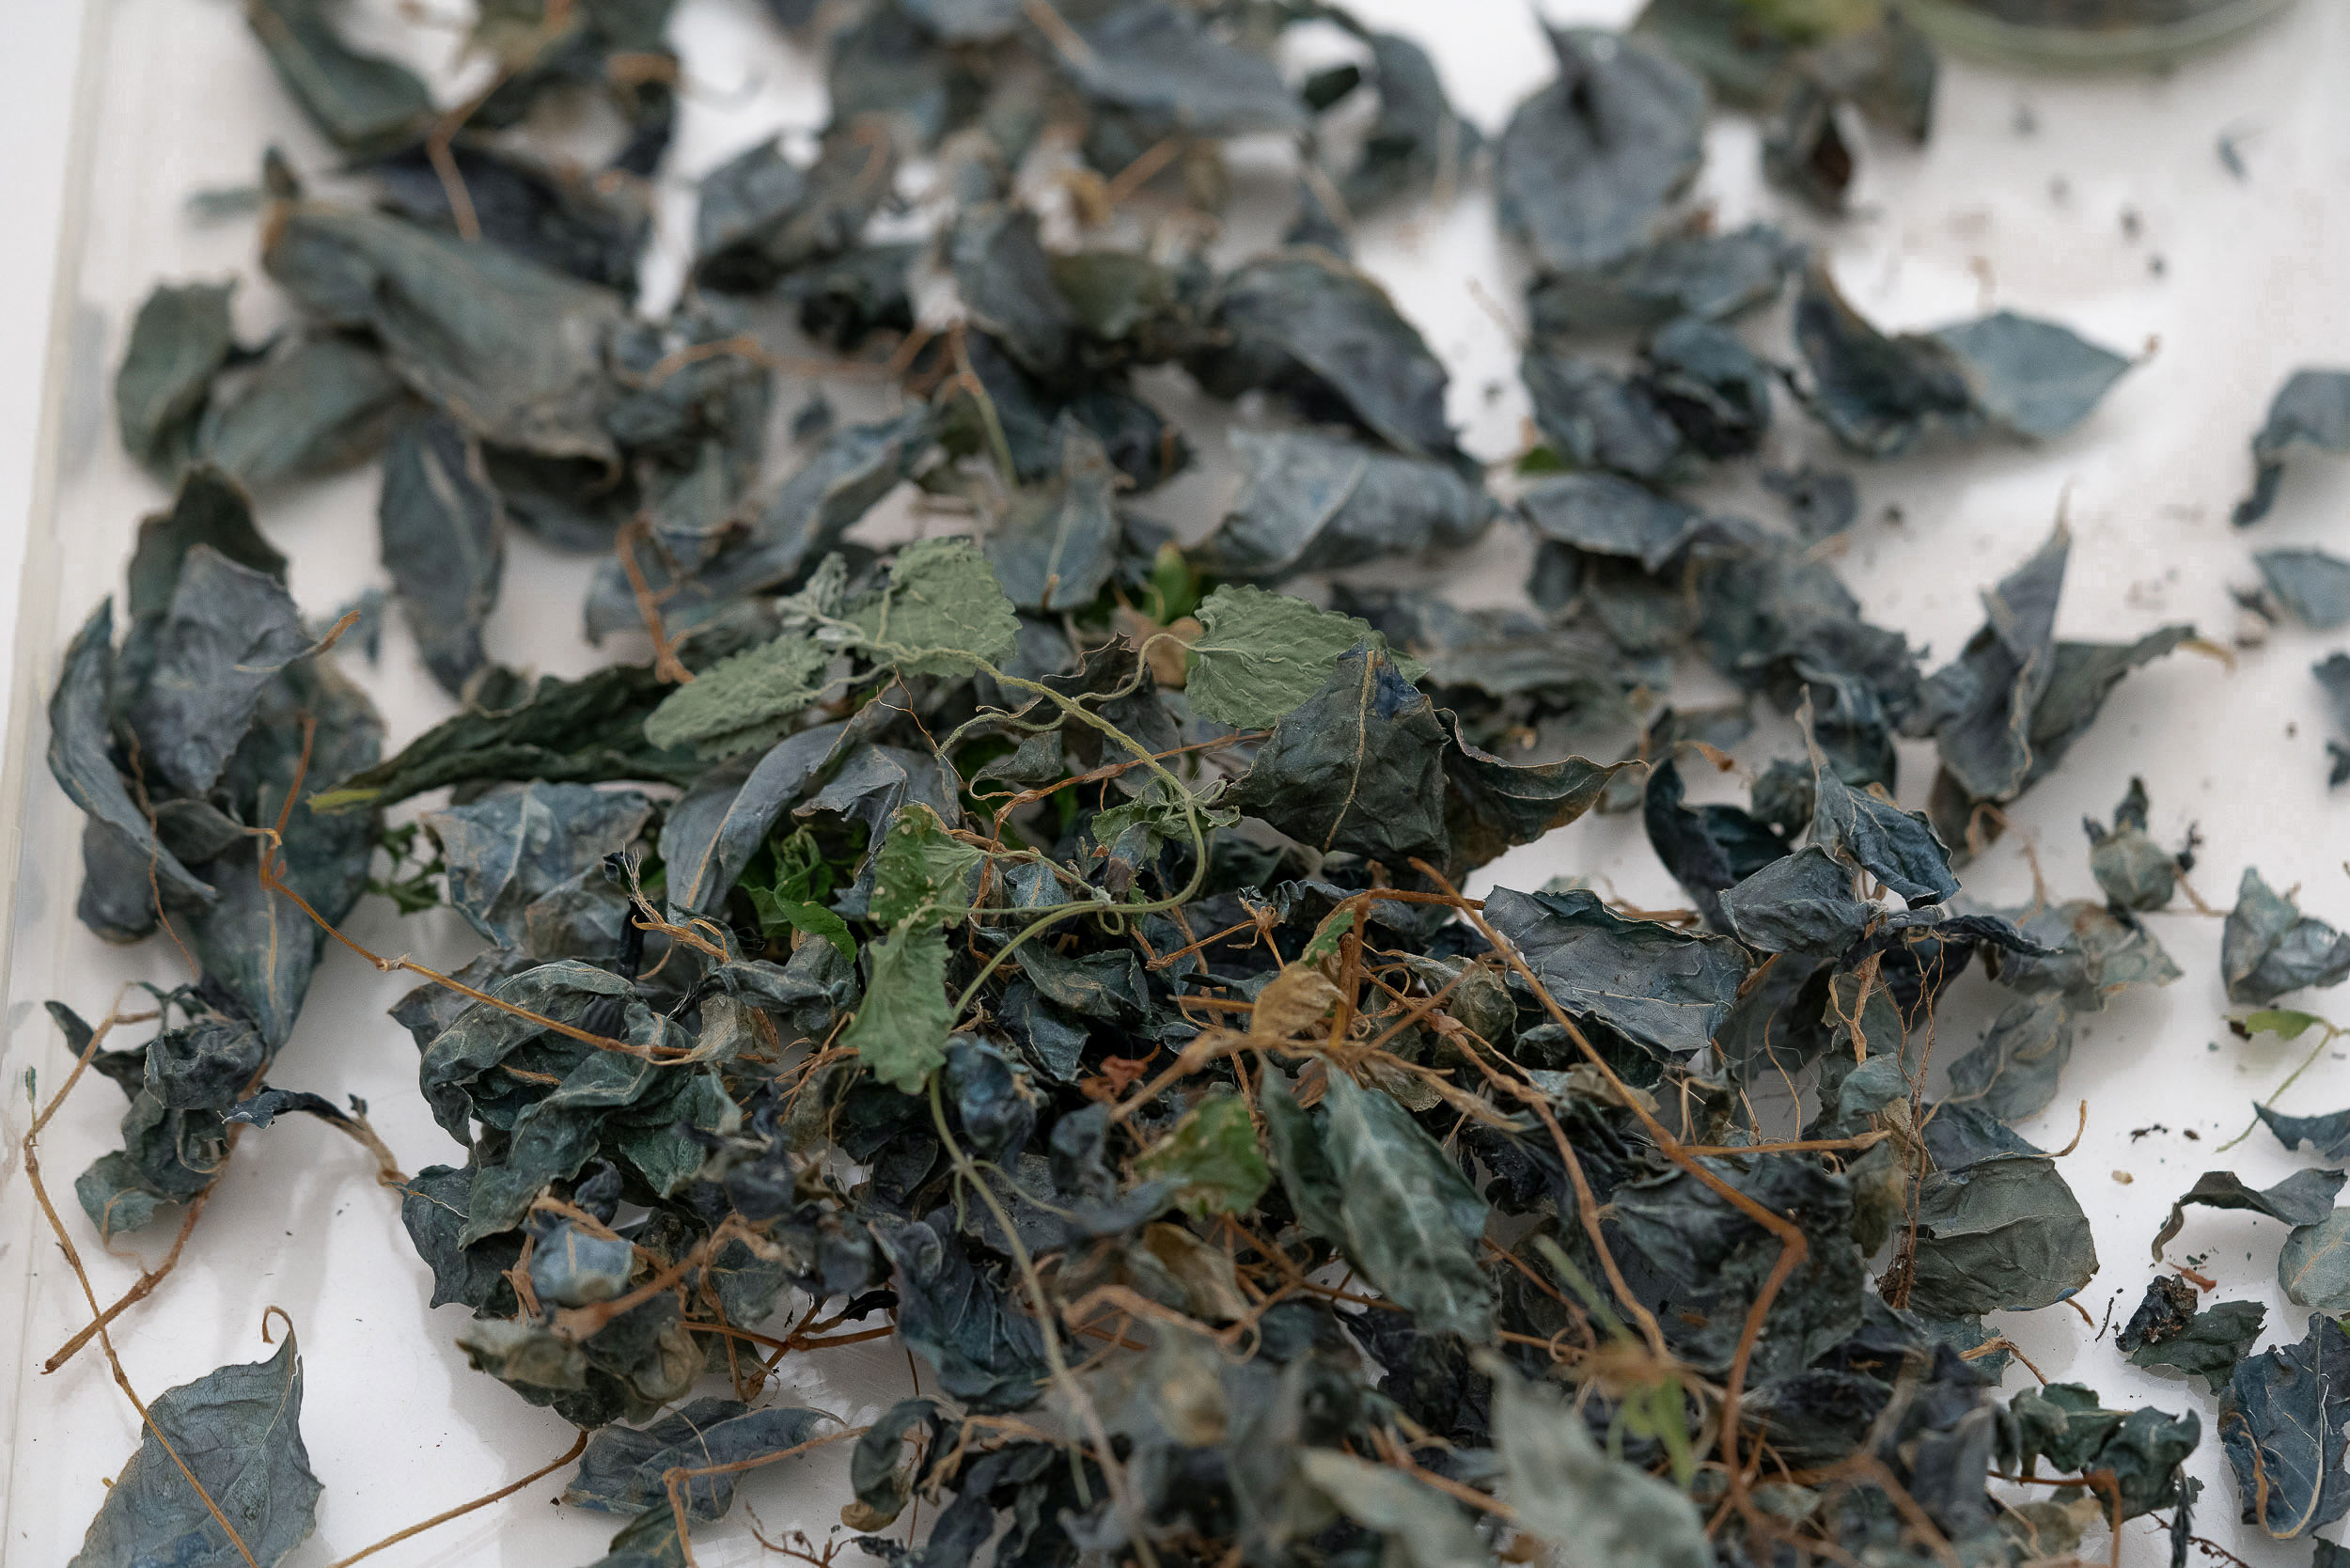 A close-up of dried indigo leaves